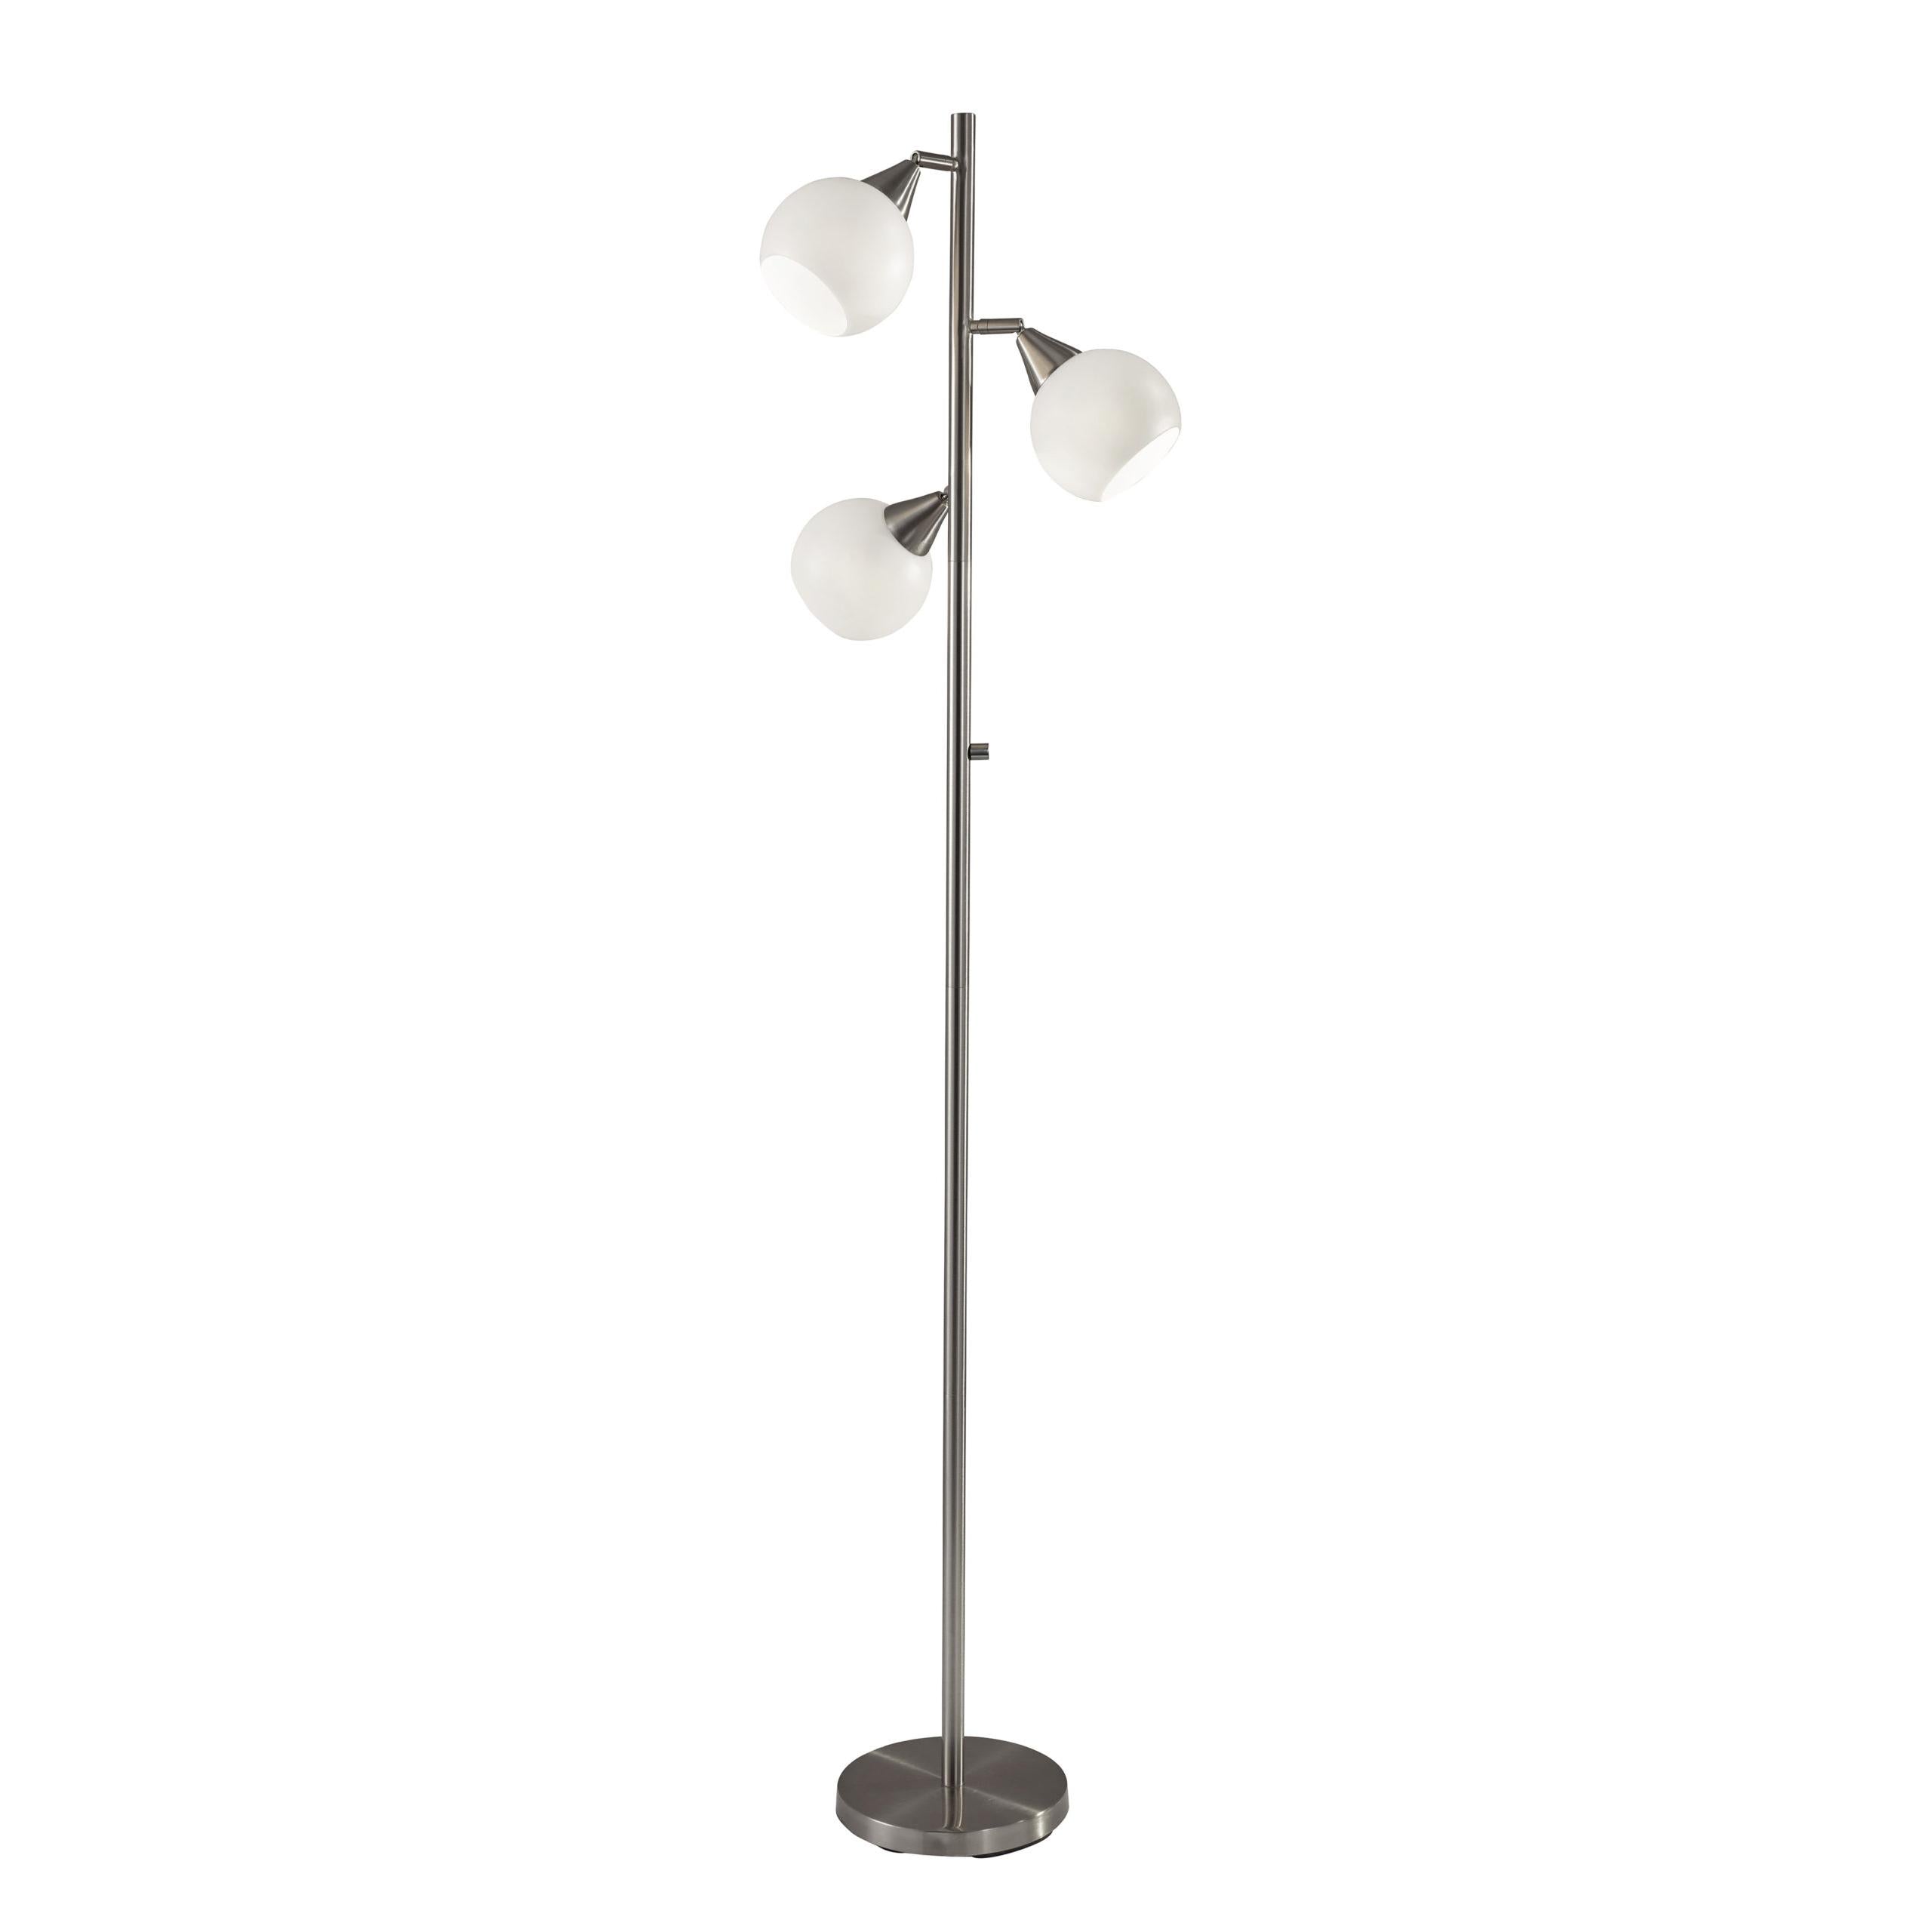 PHILLIP Floor lamp Stainless steel - 1533-22 | ADESSO